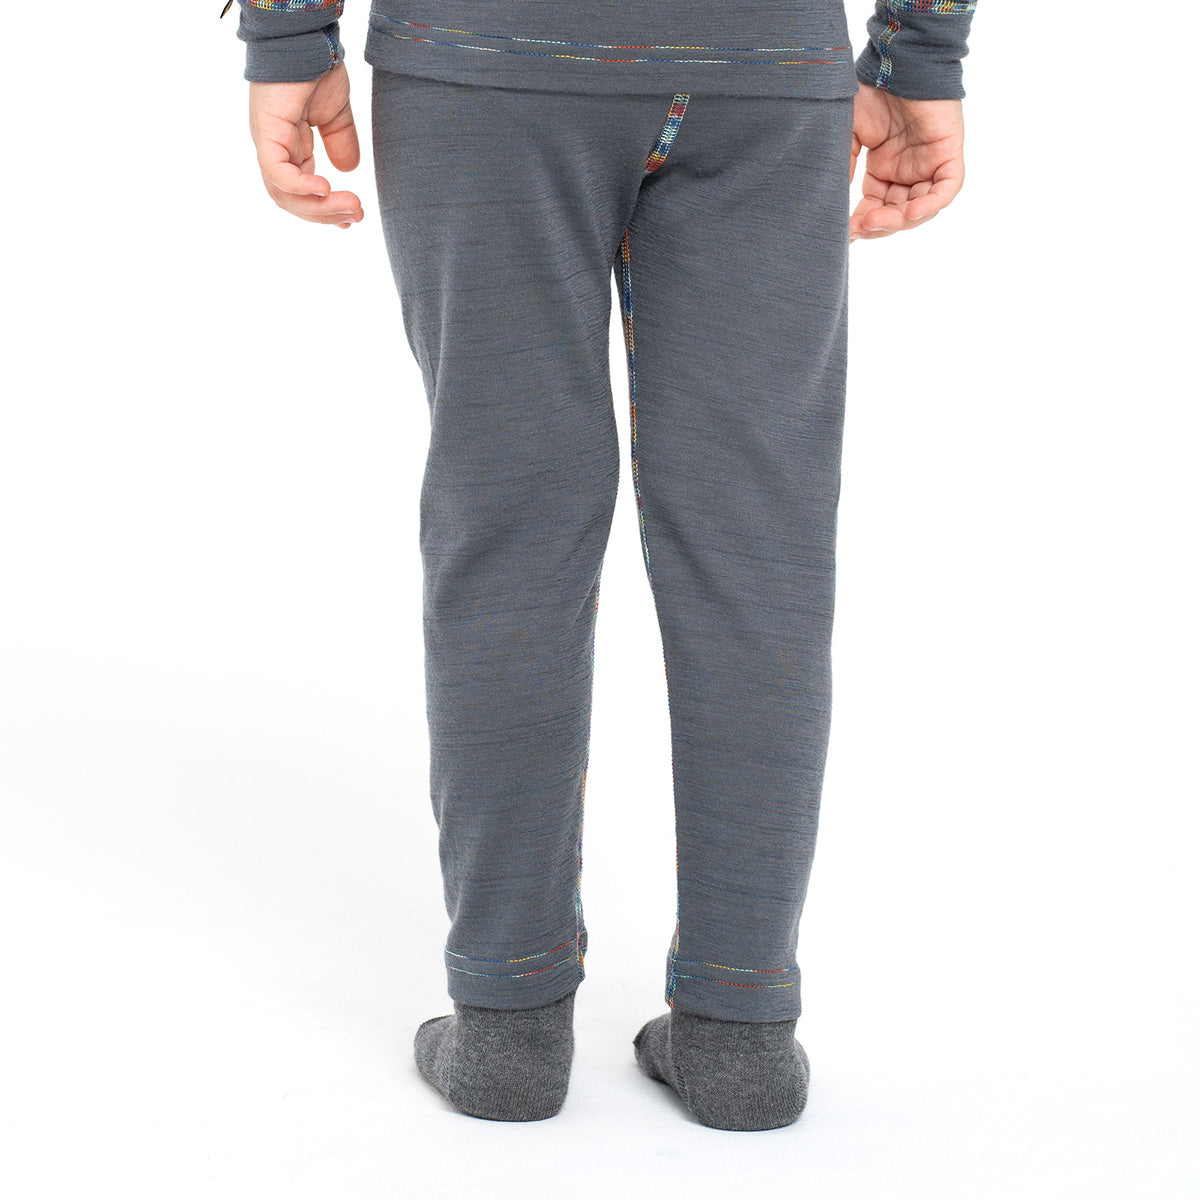 MENIQUE 100% Merino Wool Kids Pants Perfect Grey